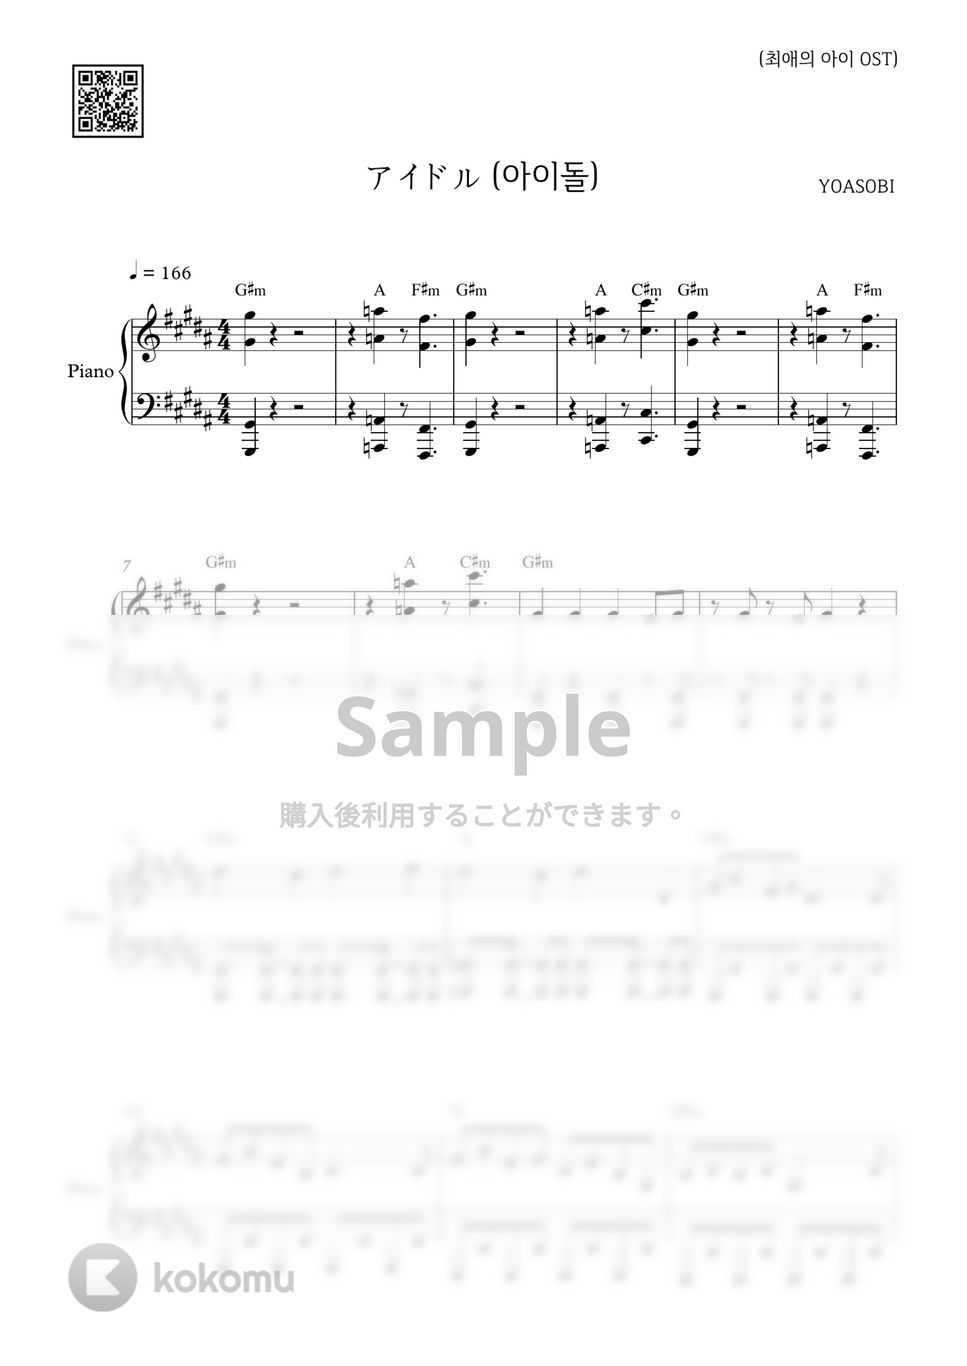 YOASOBI - アイドル by PIANOiNU